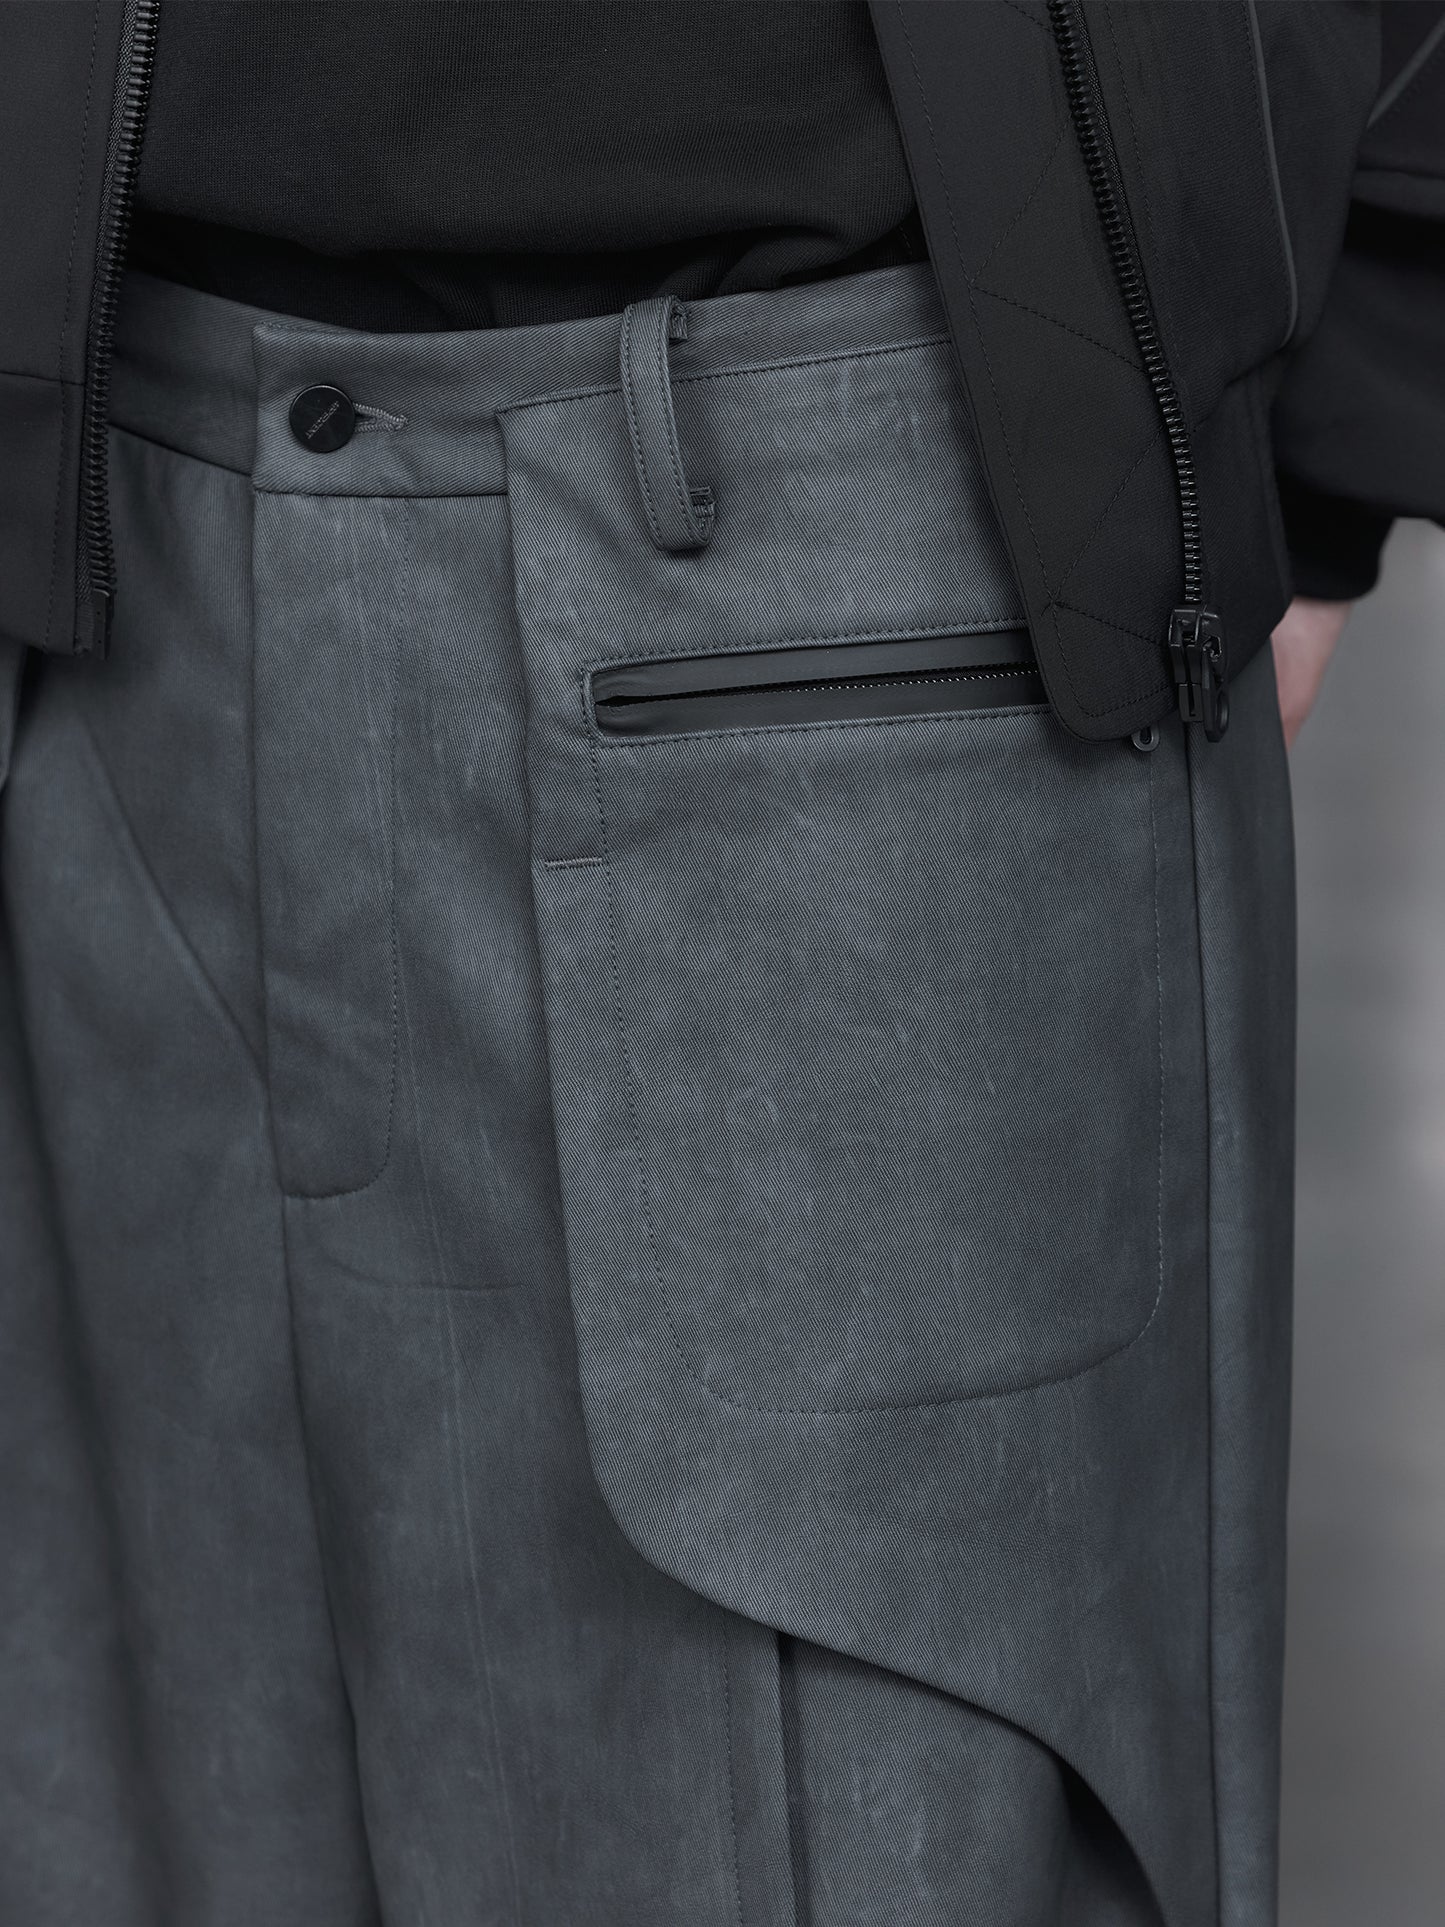 Waterproof Zipper Pocket Casual Pants 